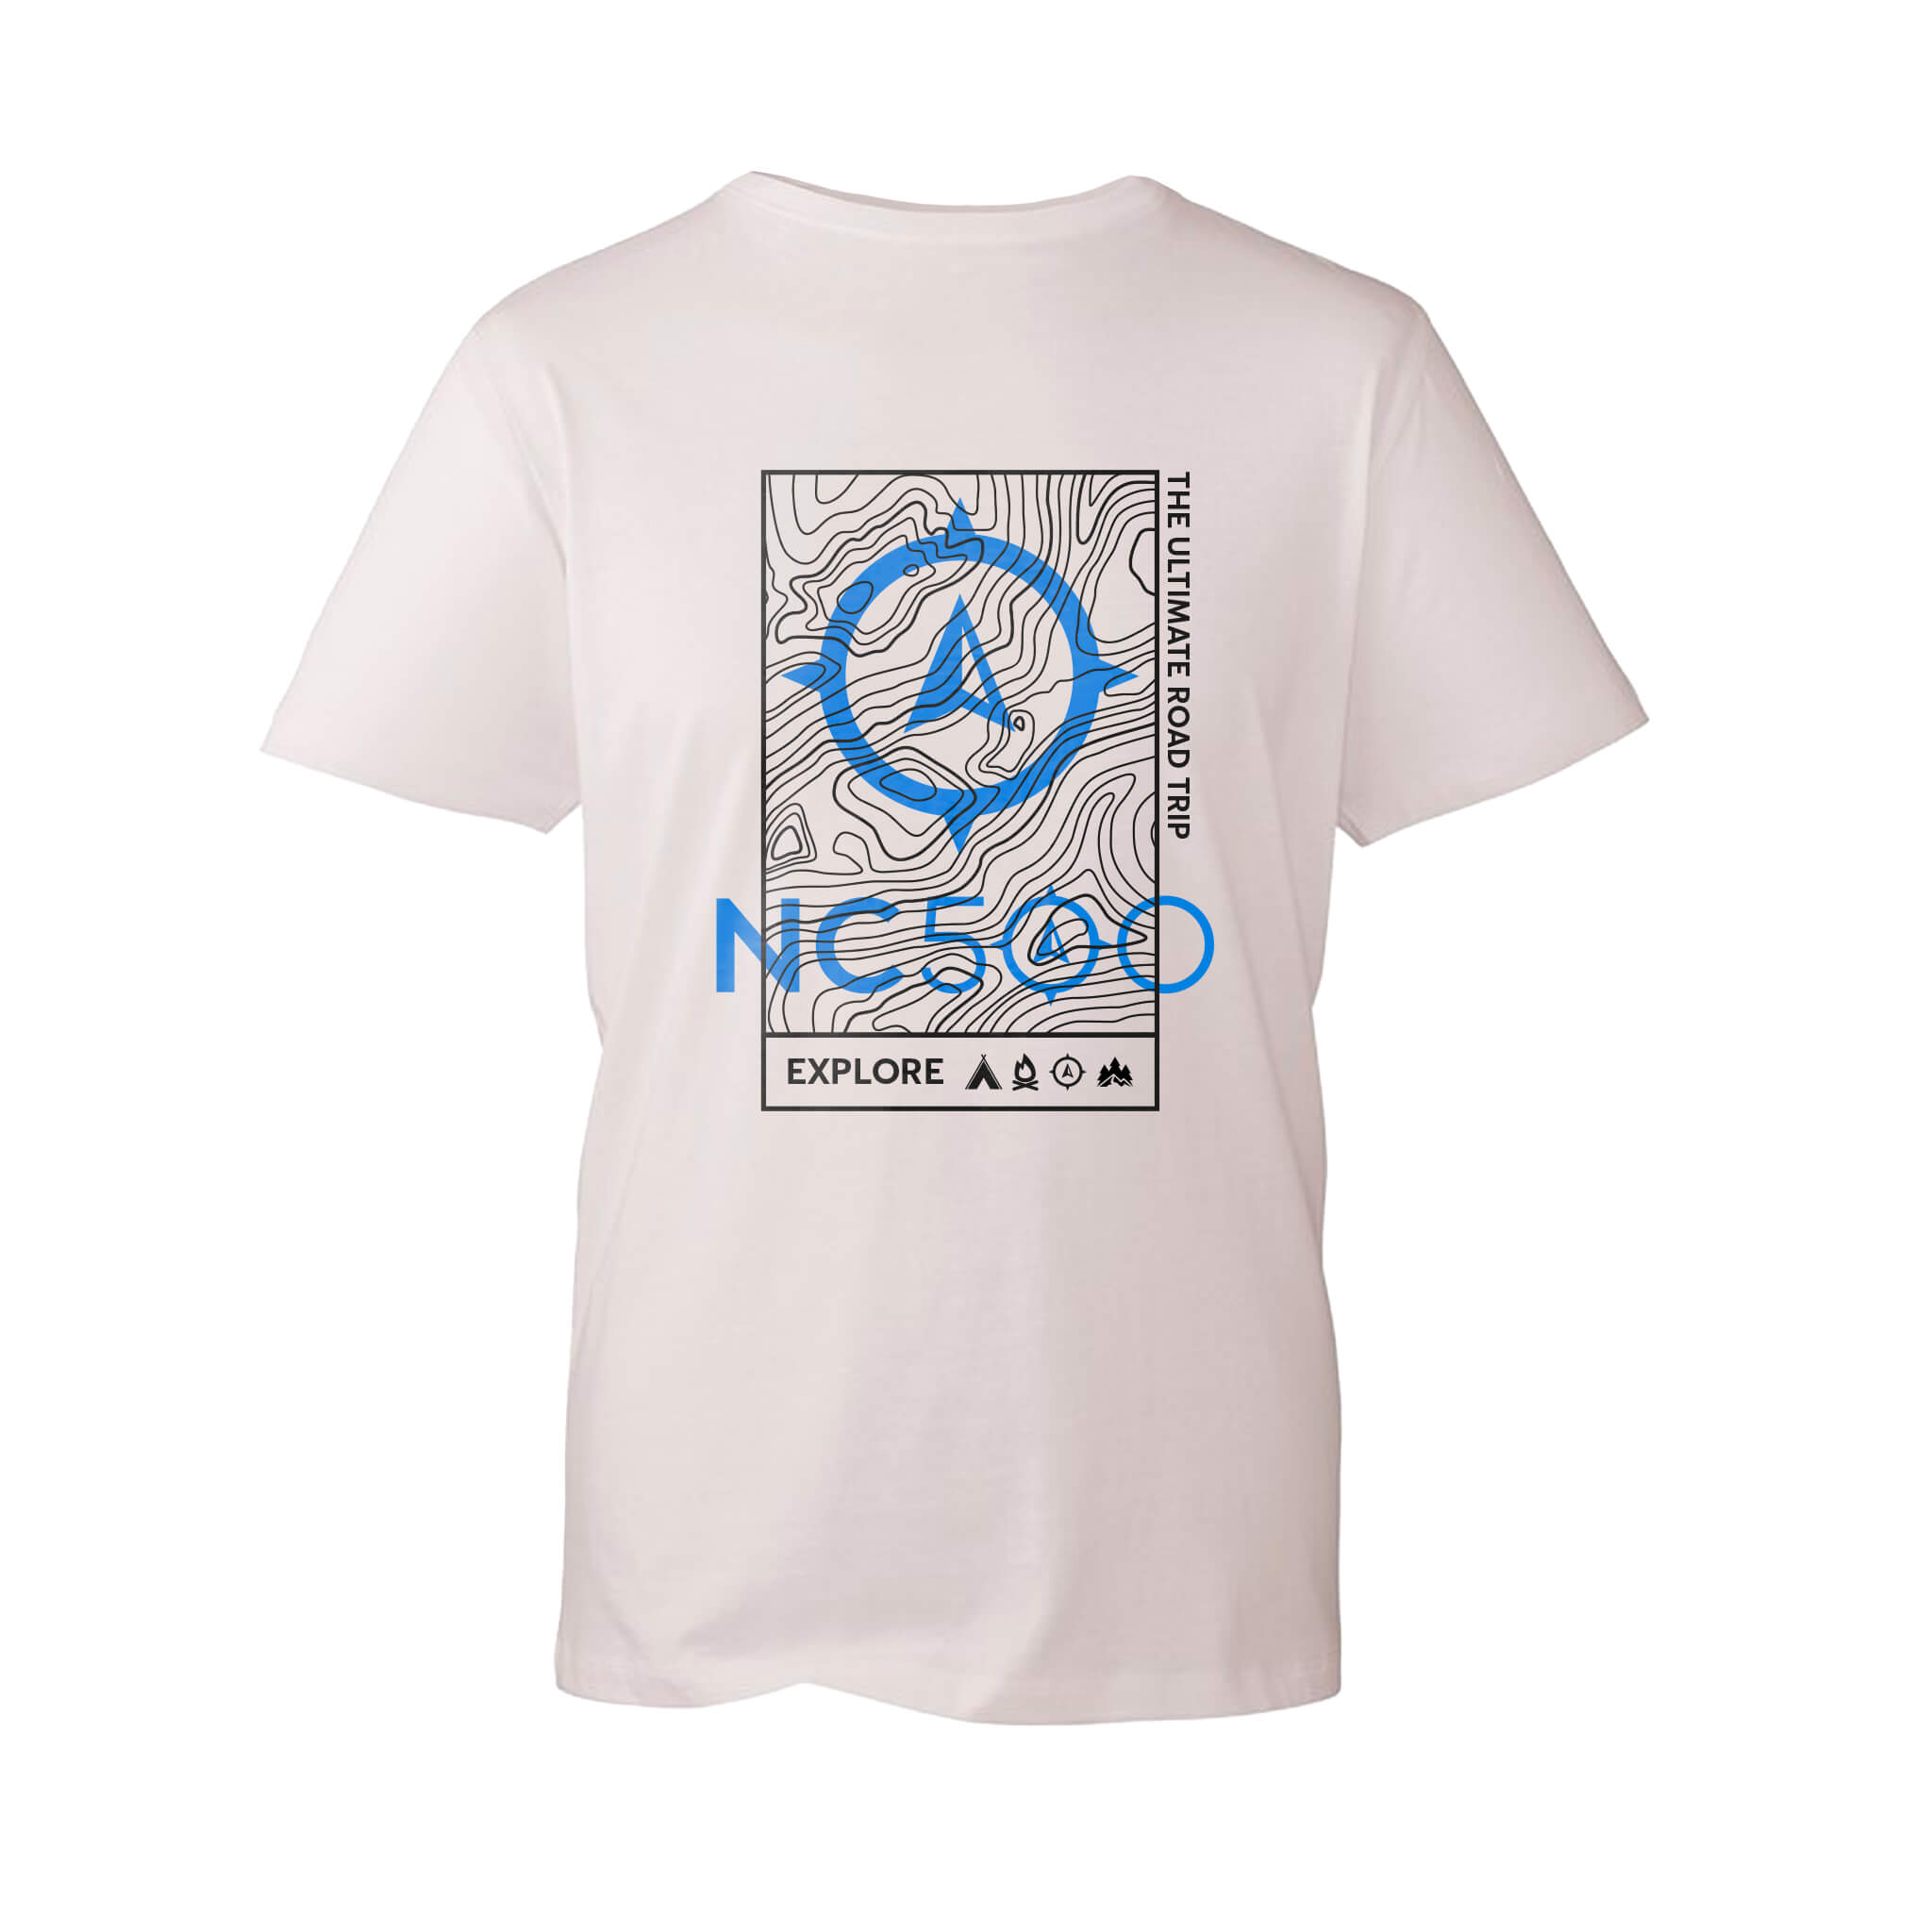 Explore Organic Cotton T-Shirt - White - Back View - North Coast 500